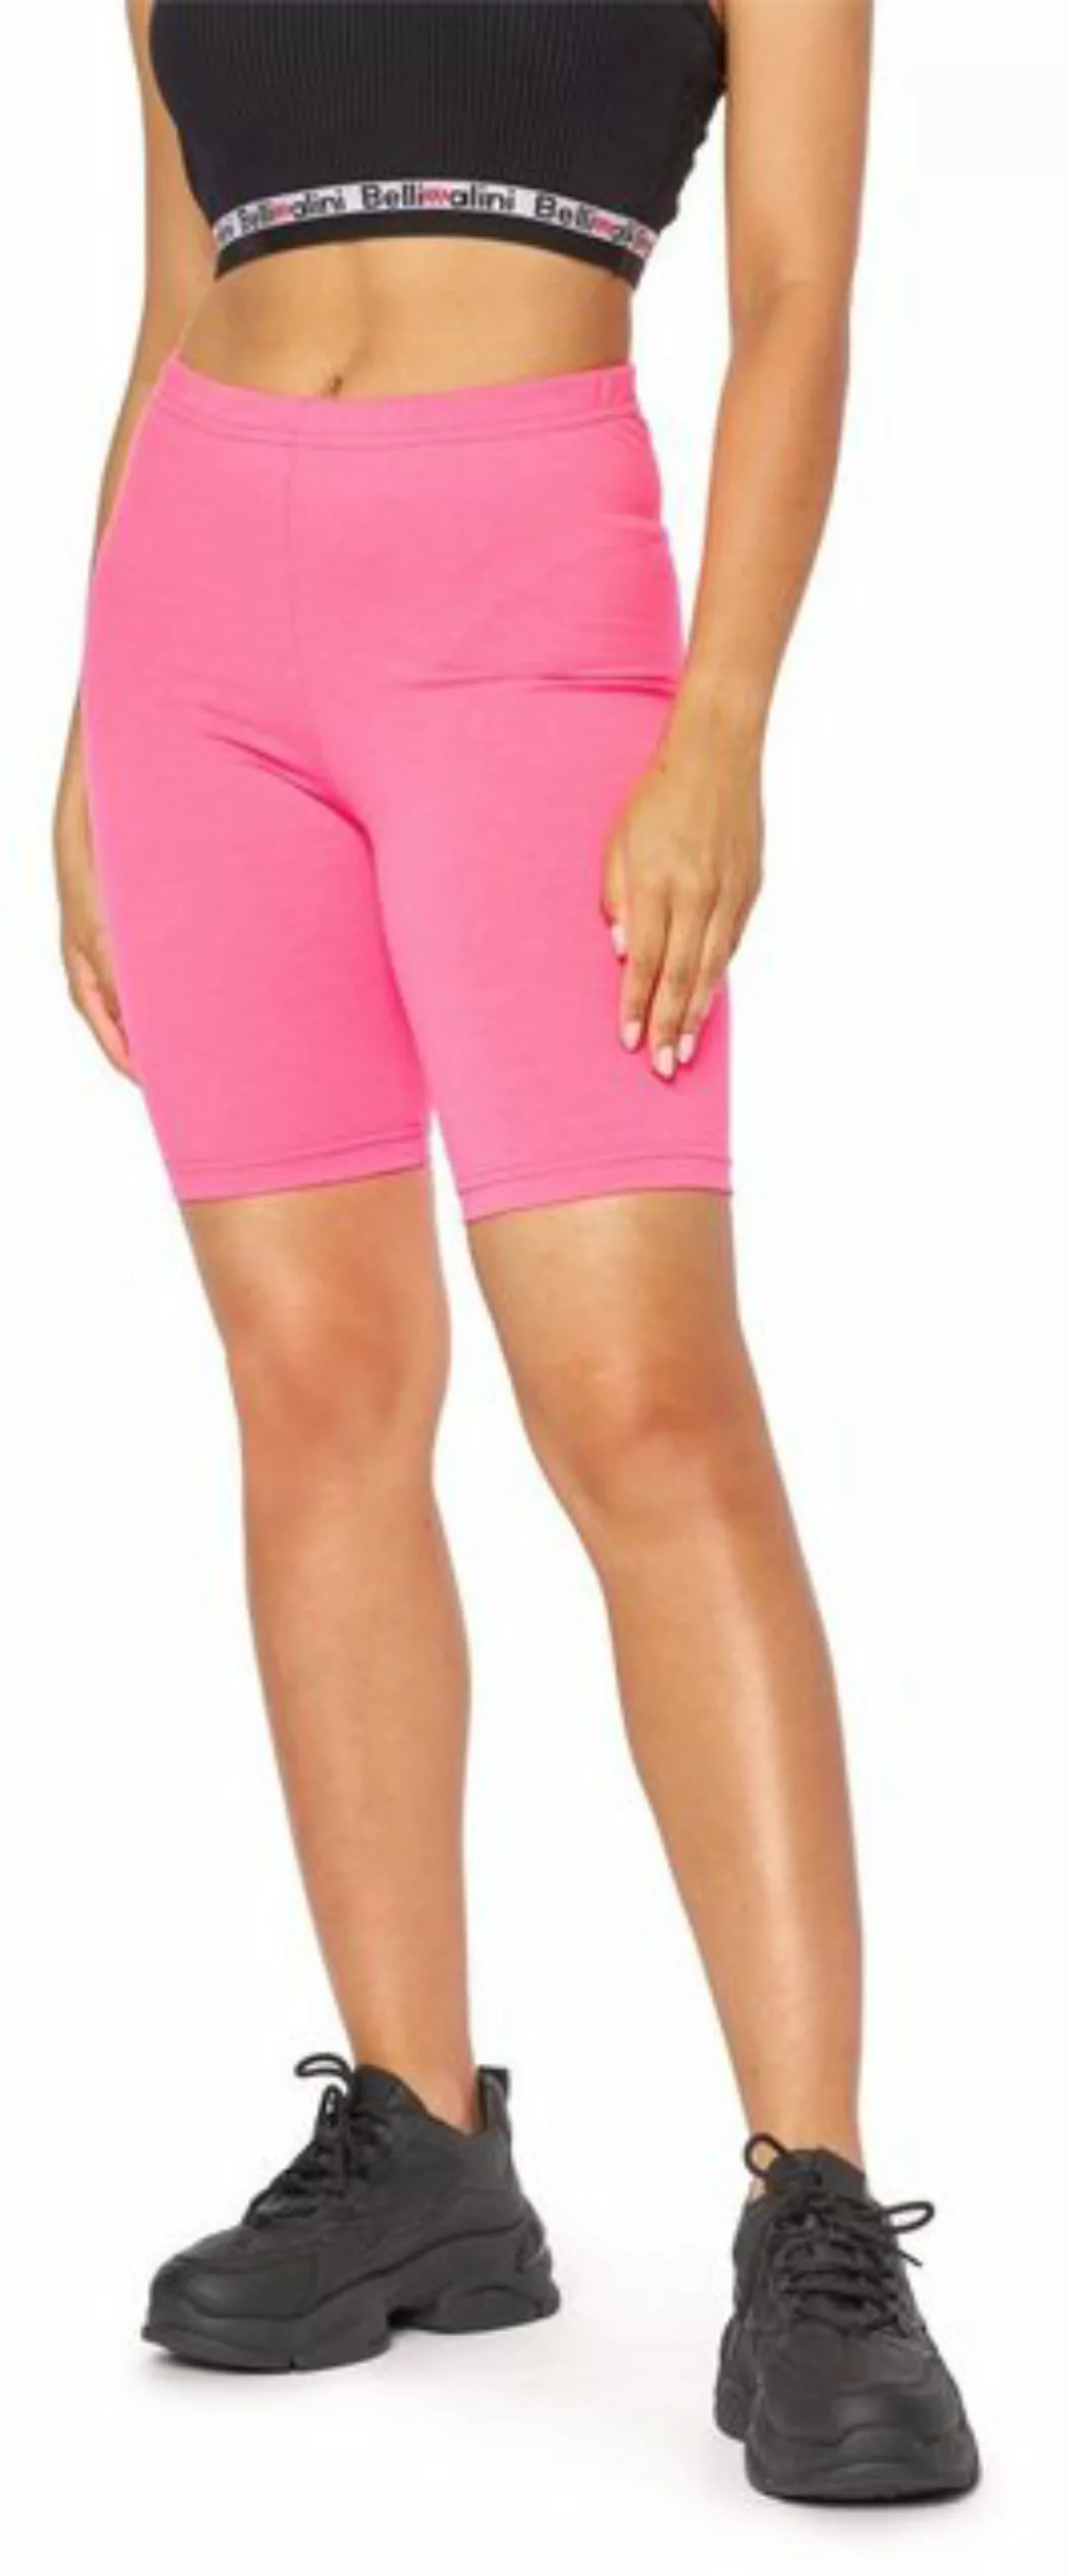 Bellivalini Leggings Damen Neon Shorts Kurze Radlerhose Jogginghose BLV50-3 günstig online kaufen